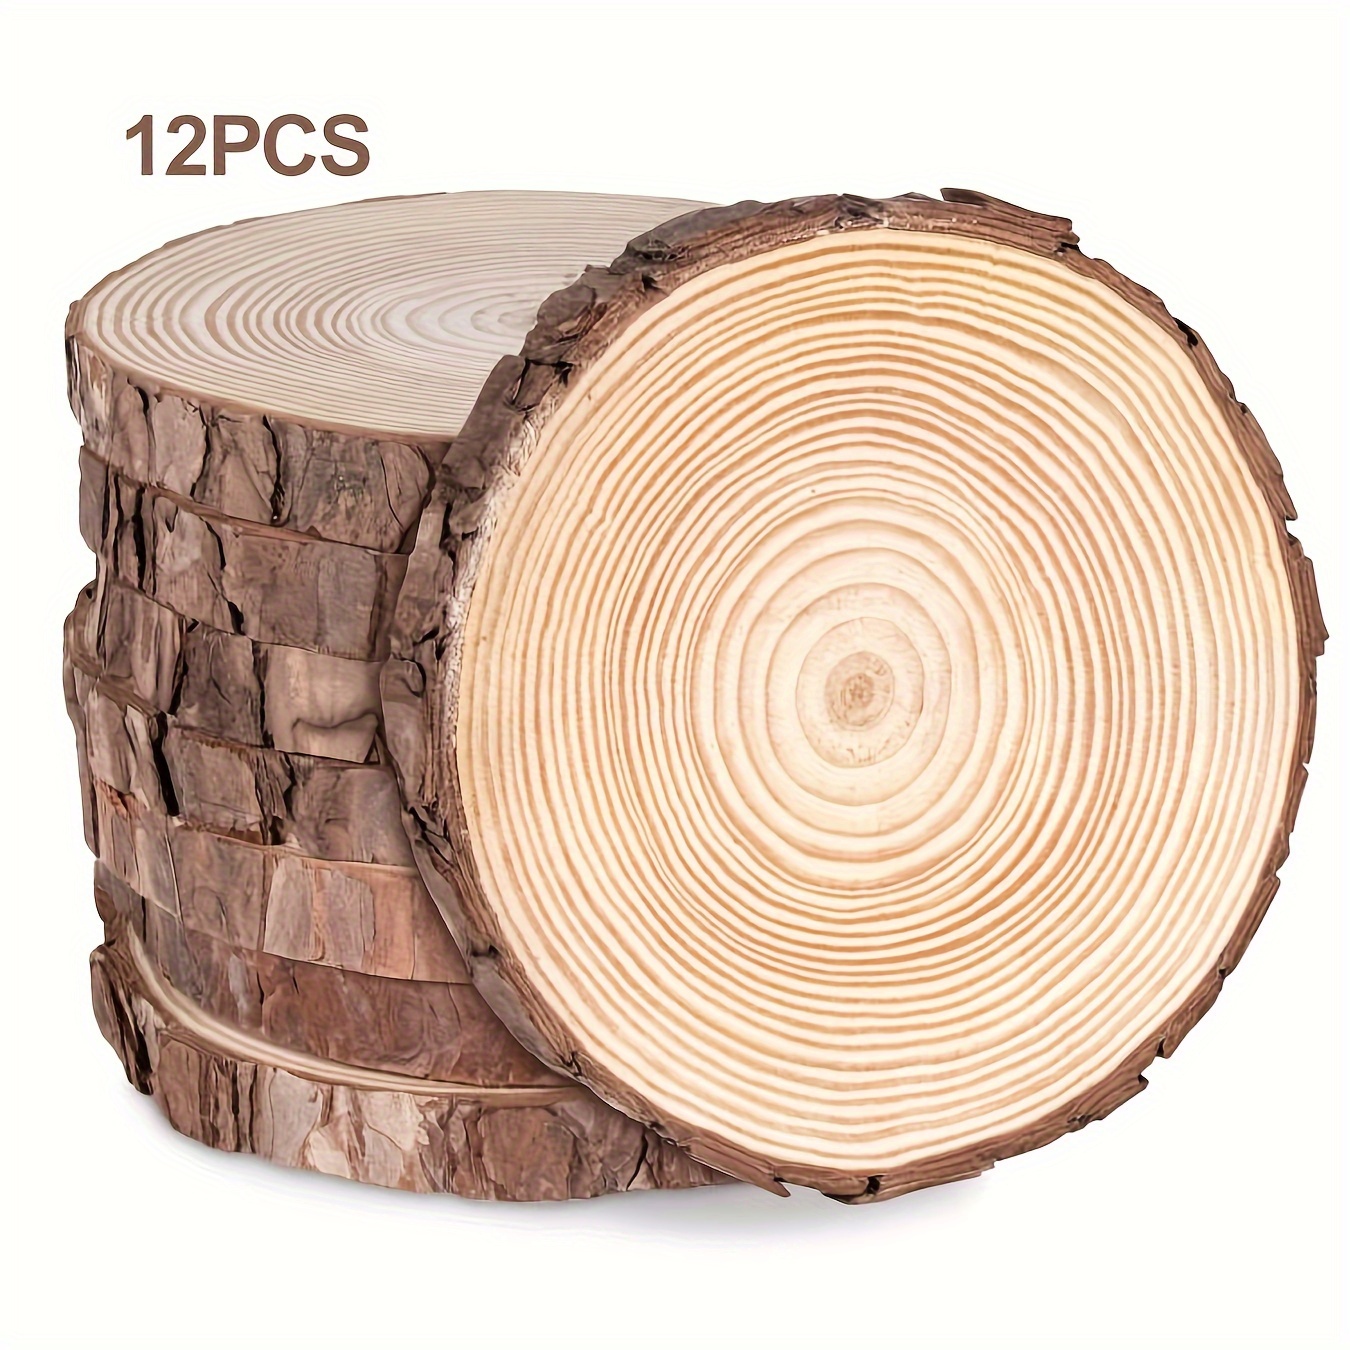 Comprar Rodaja de madera natural grande online - holamama